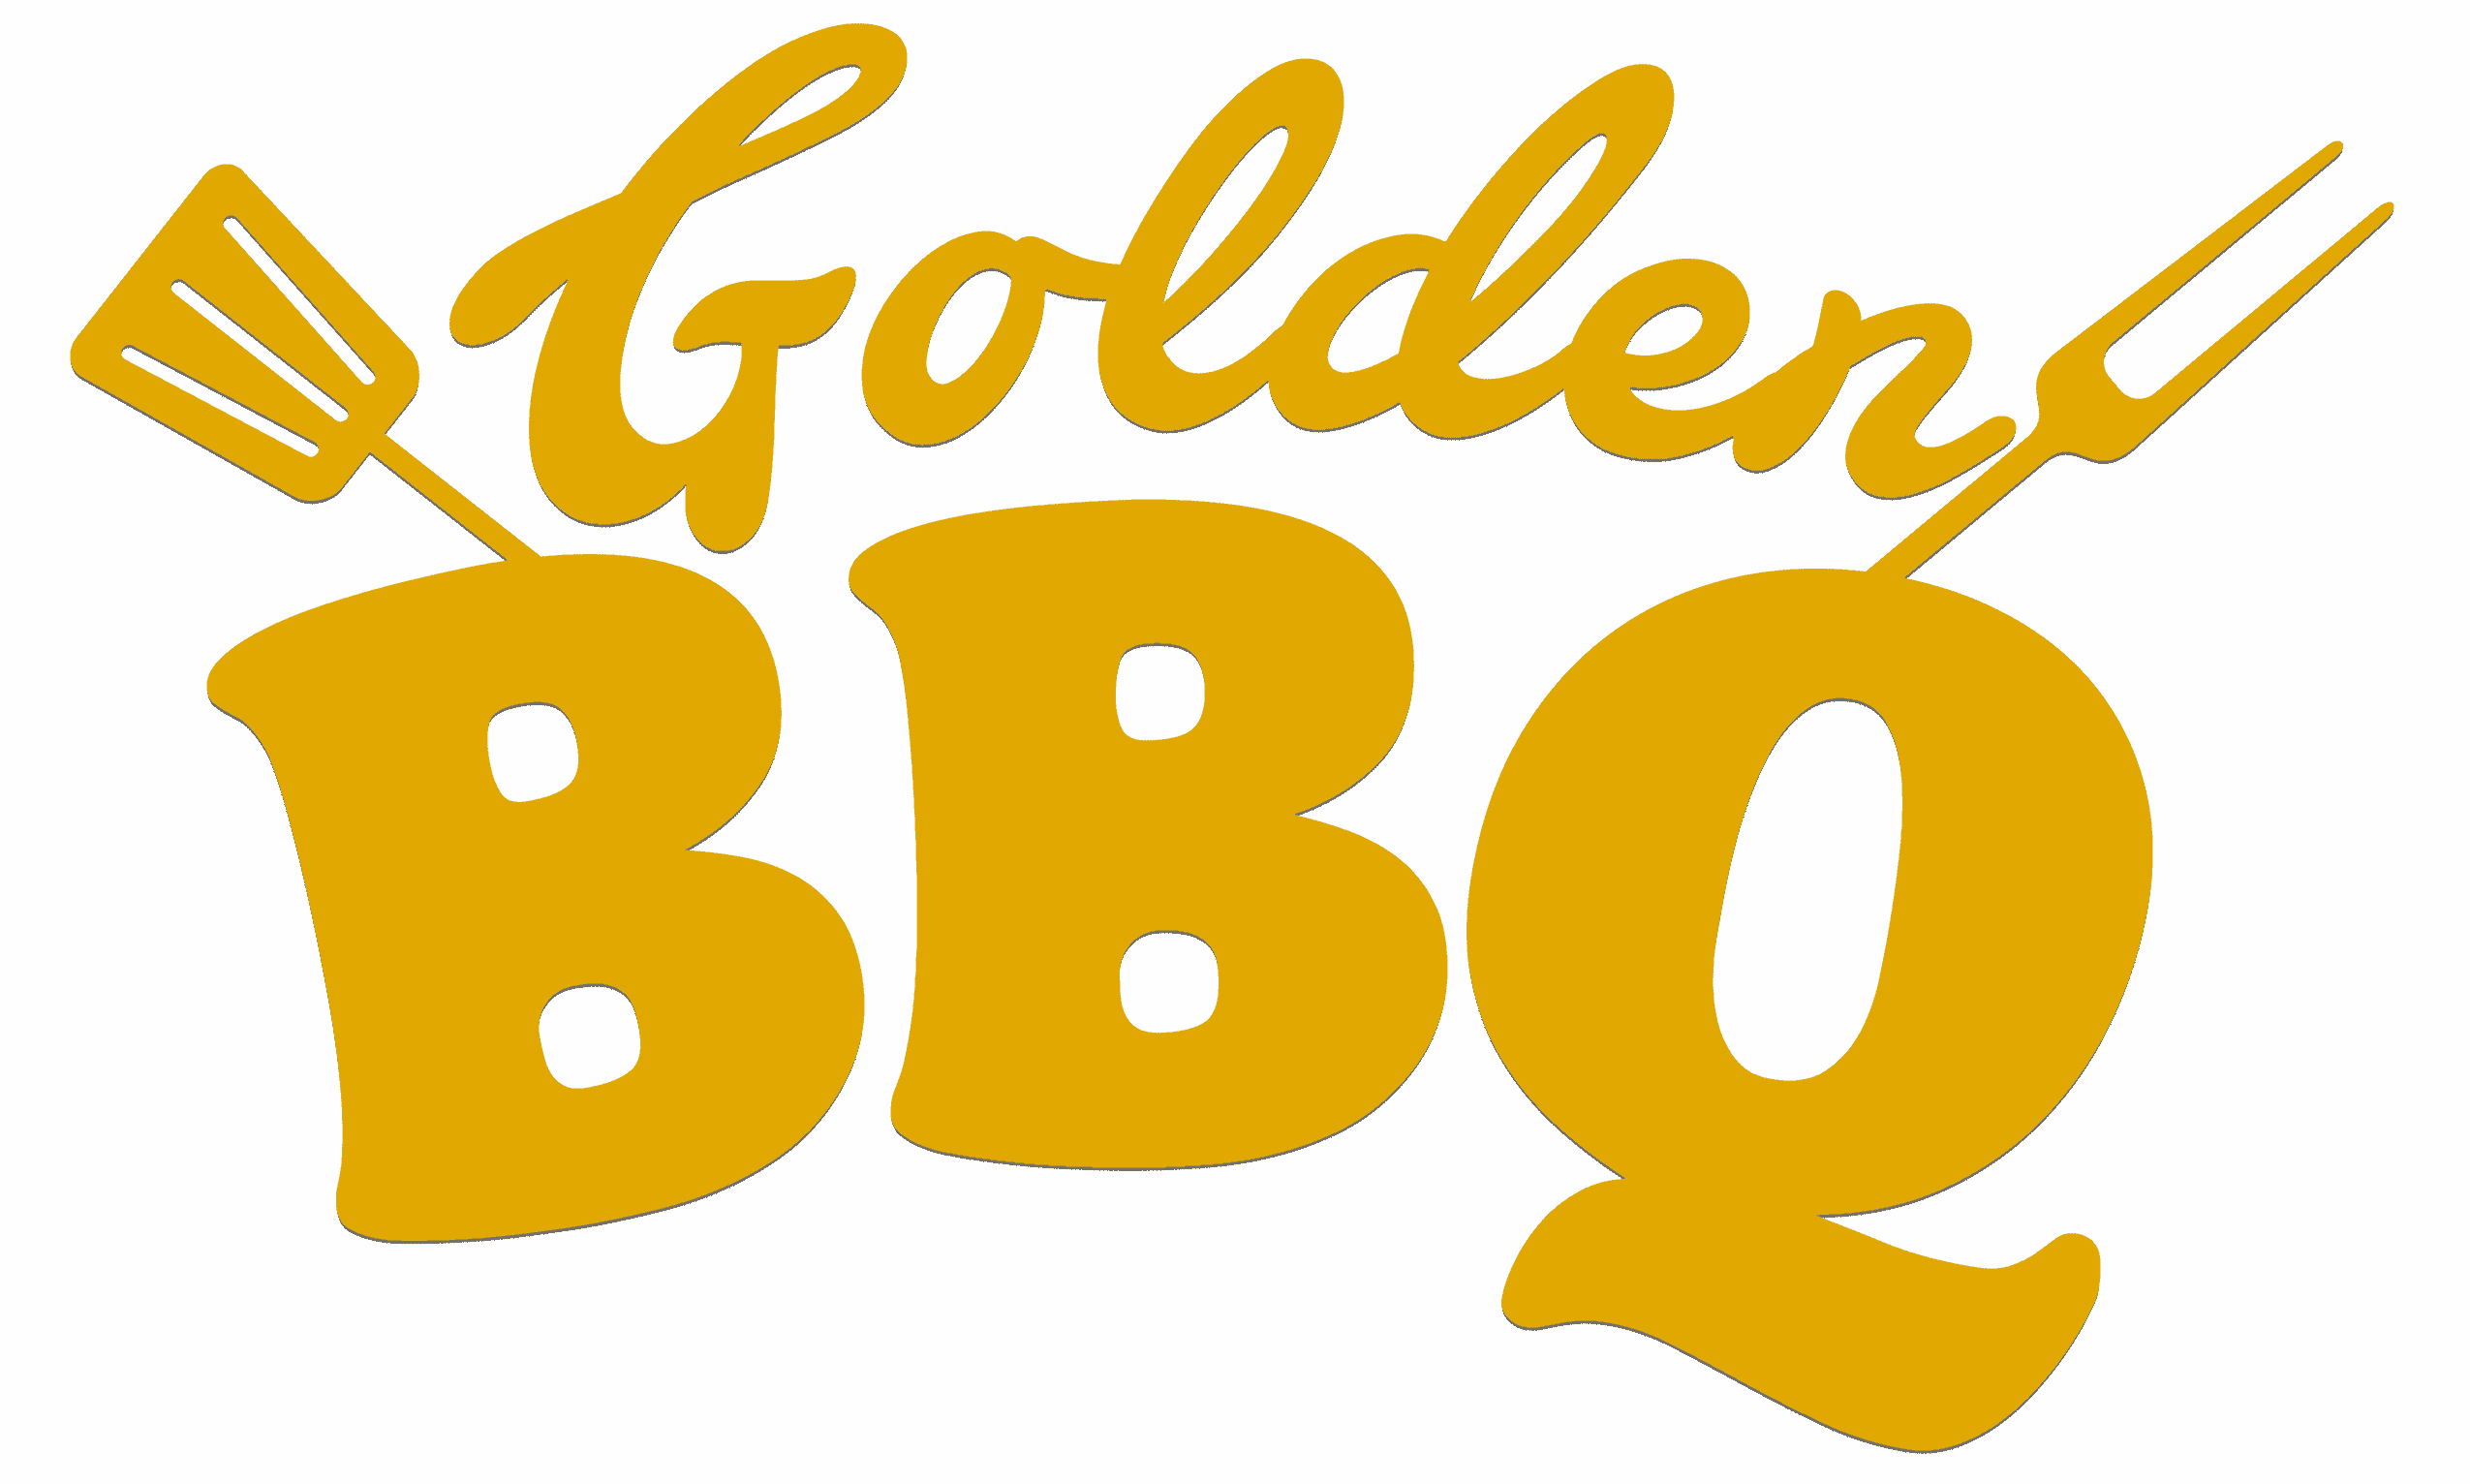 Golden BBQ logo